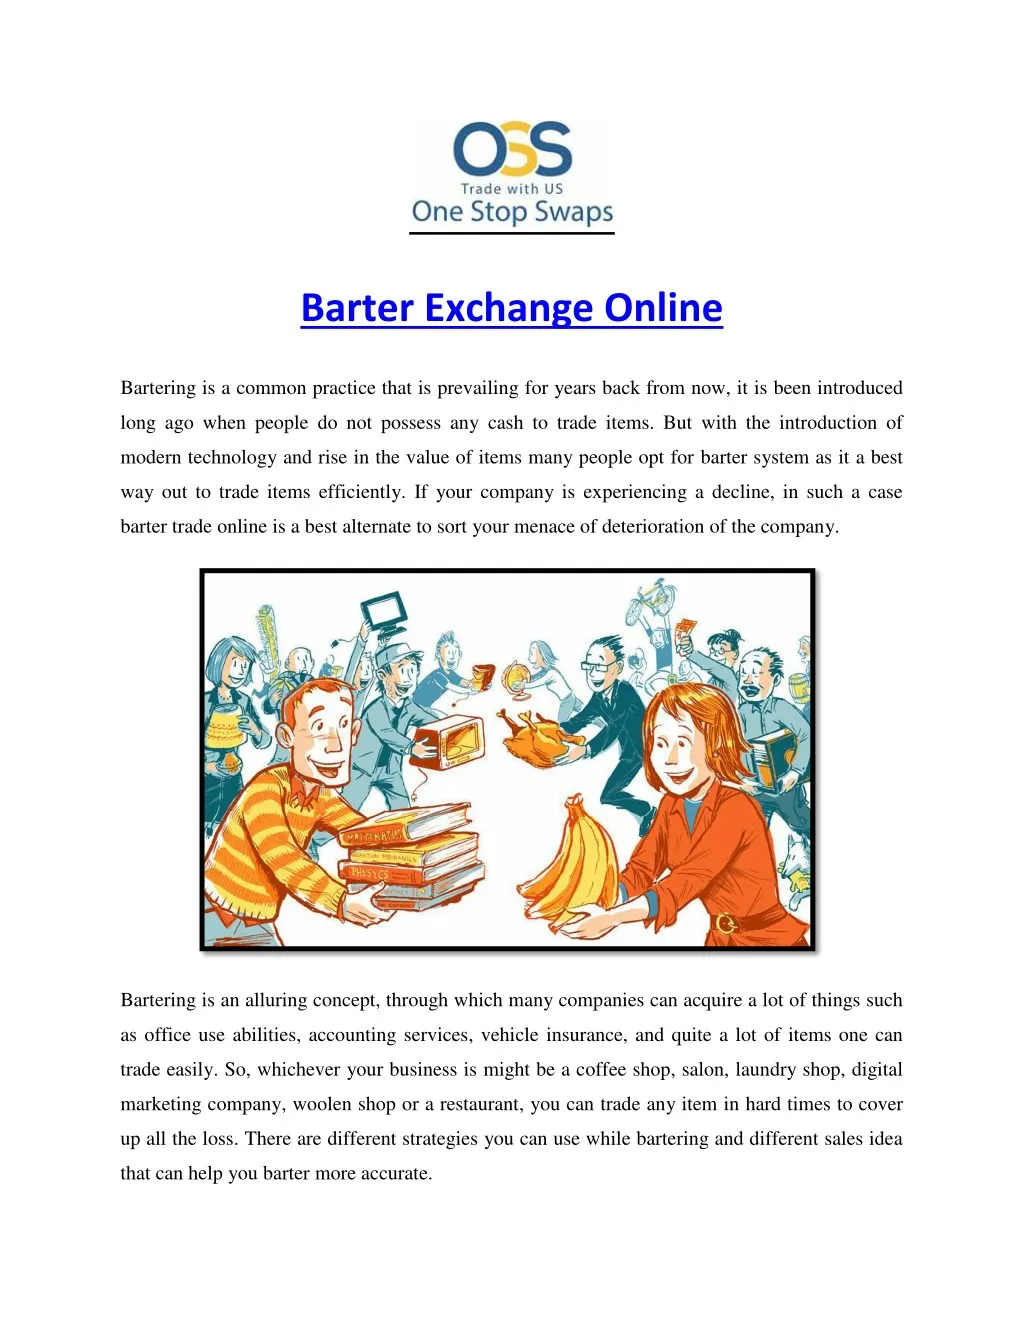 barter exchange online n.